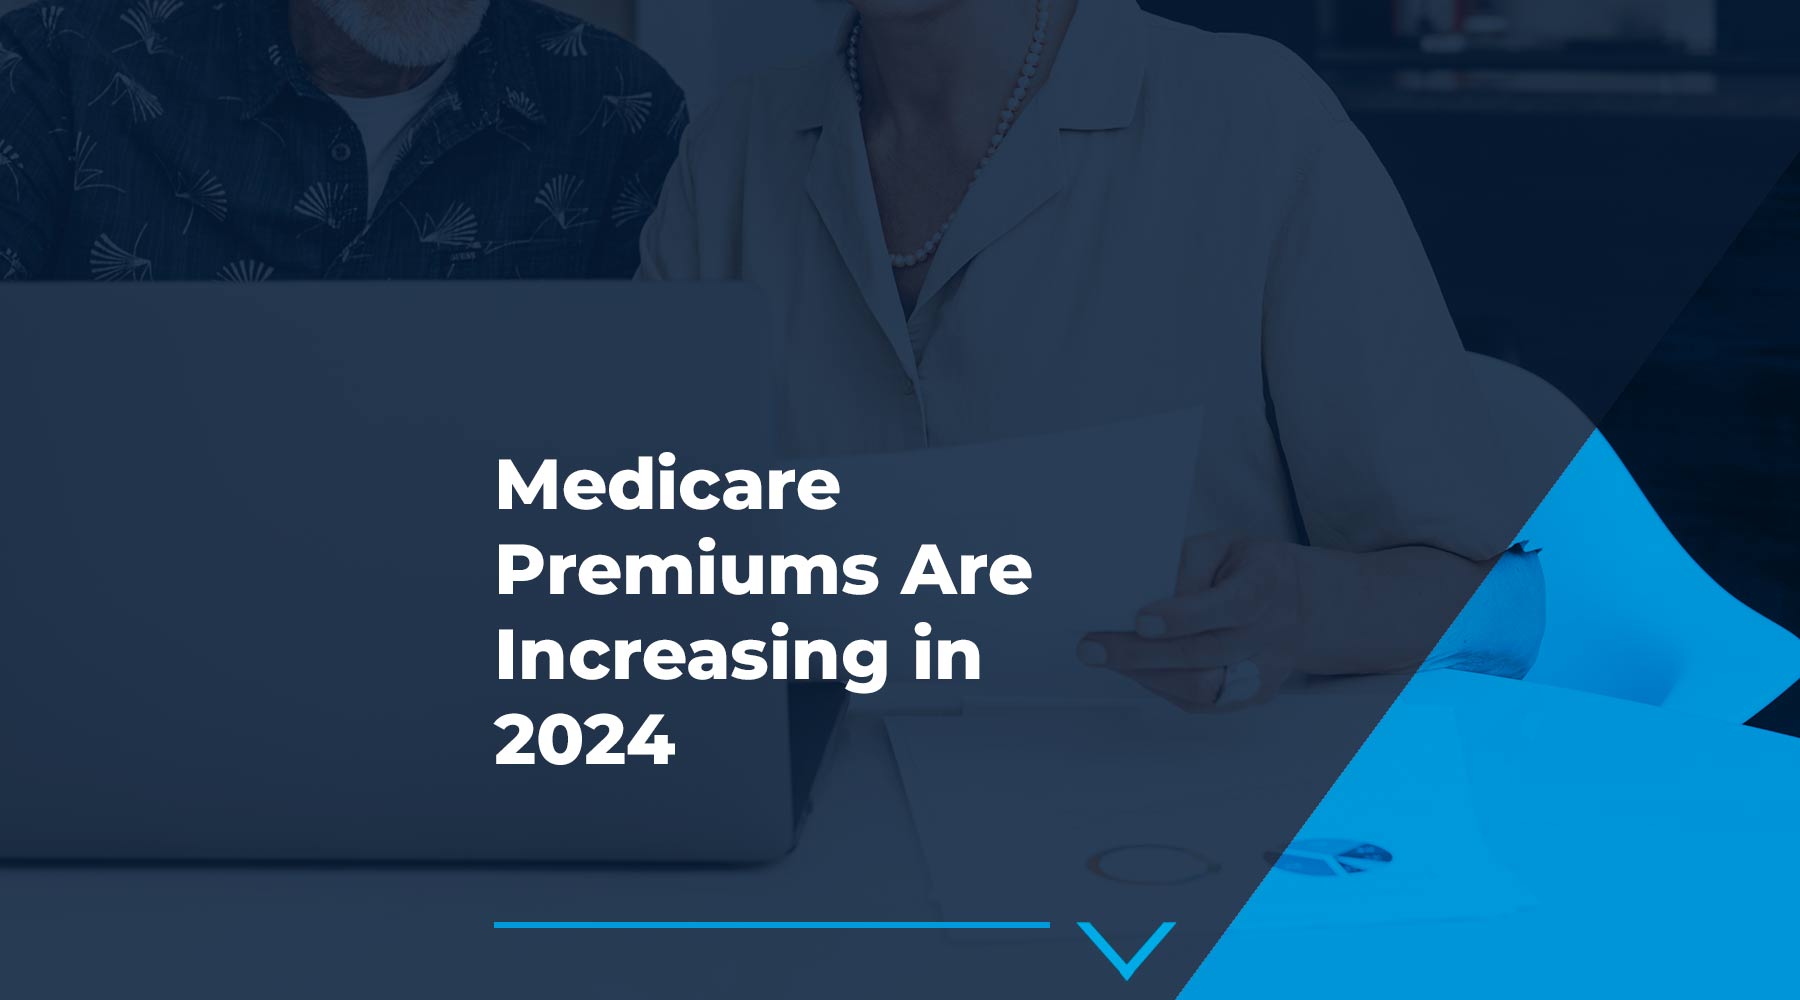 Medicare Premiums Are Increasing in 2024